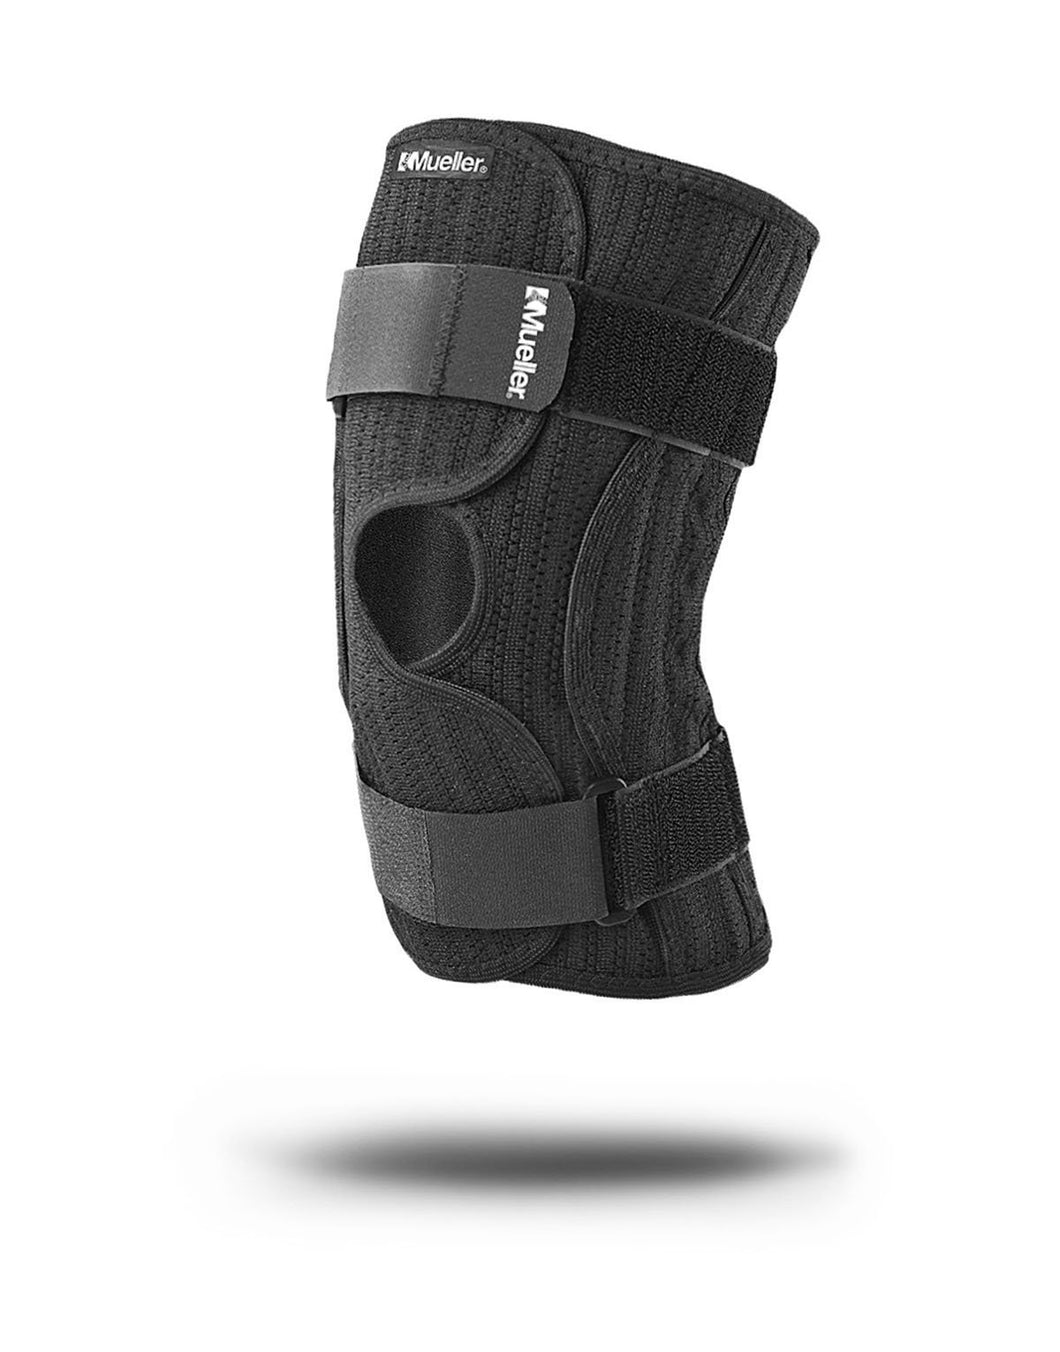 Mueller® Elastic Knee Brace, Black, Large/X-Large